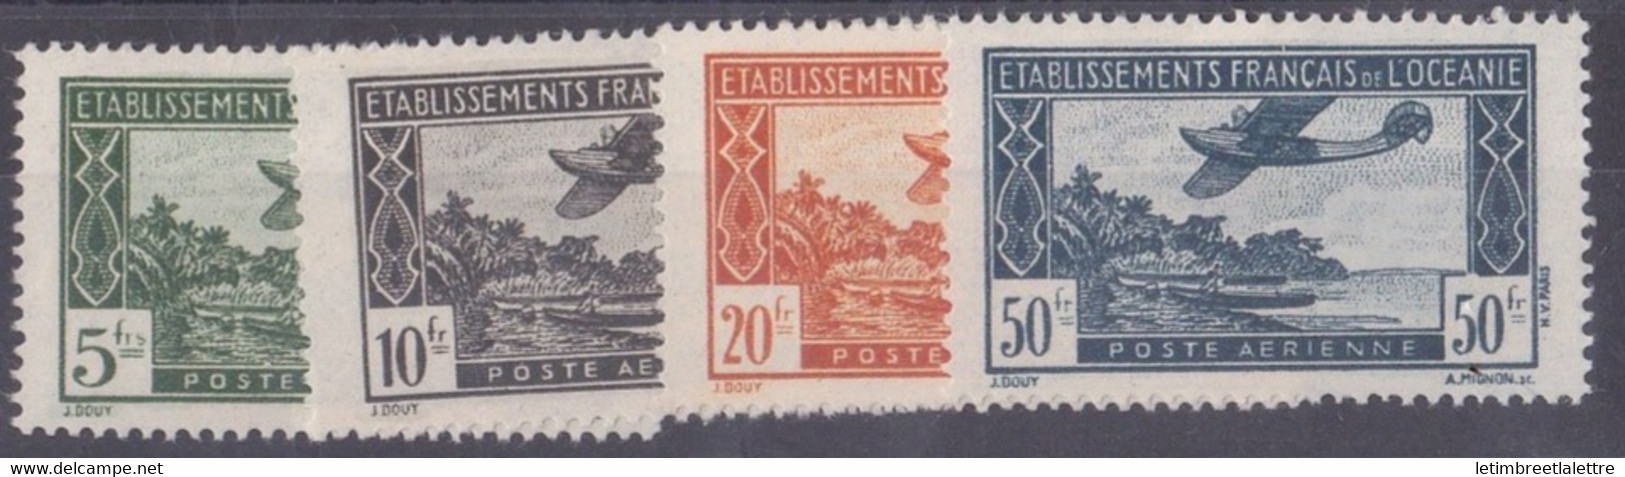 Océanie - Poste Aérienne - YT N° 14 à 17 ** - Neuf Sans Charnière - 1944 - Posta Aerea